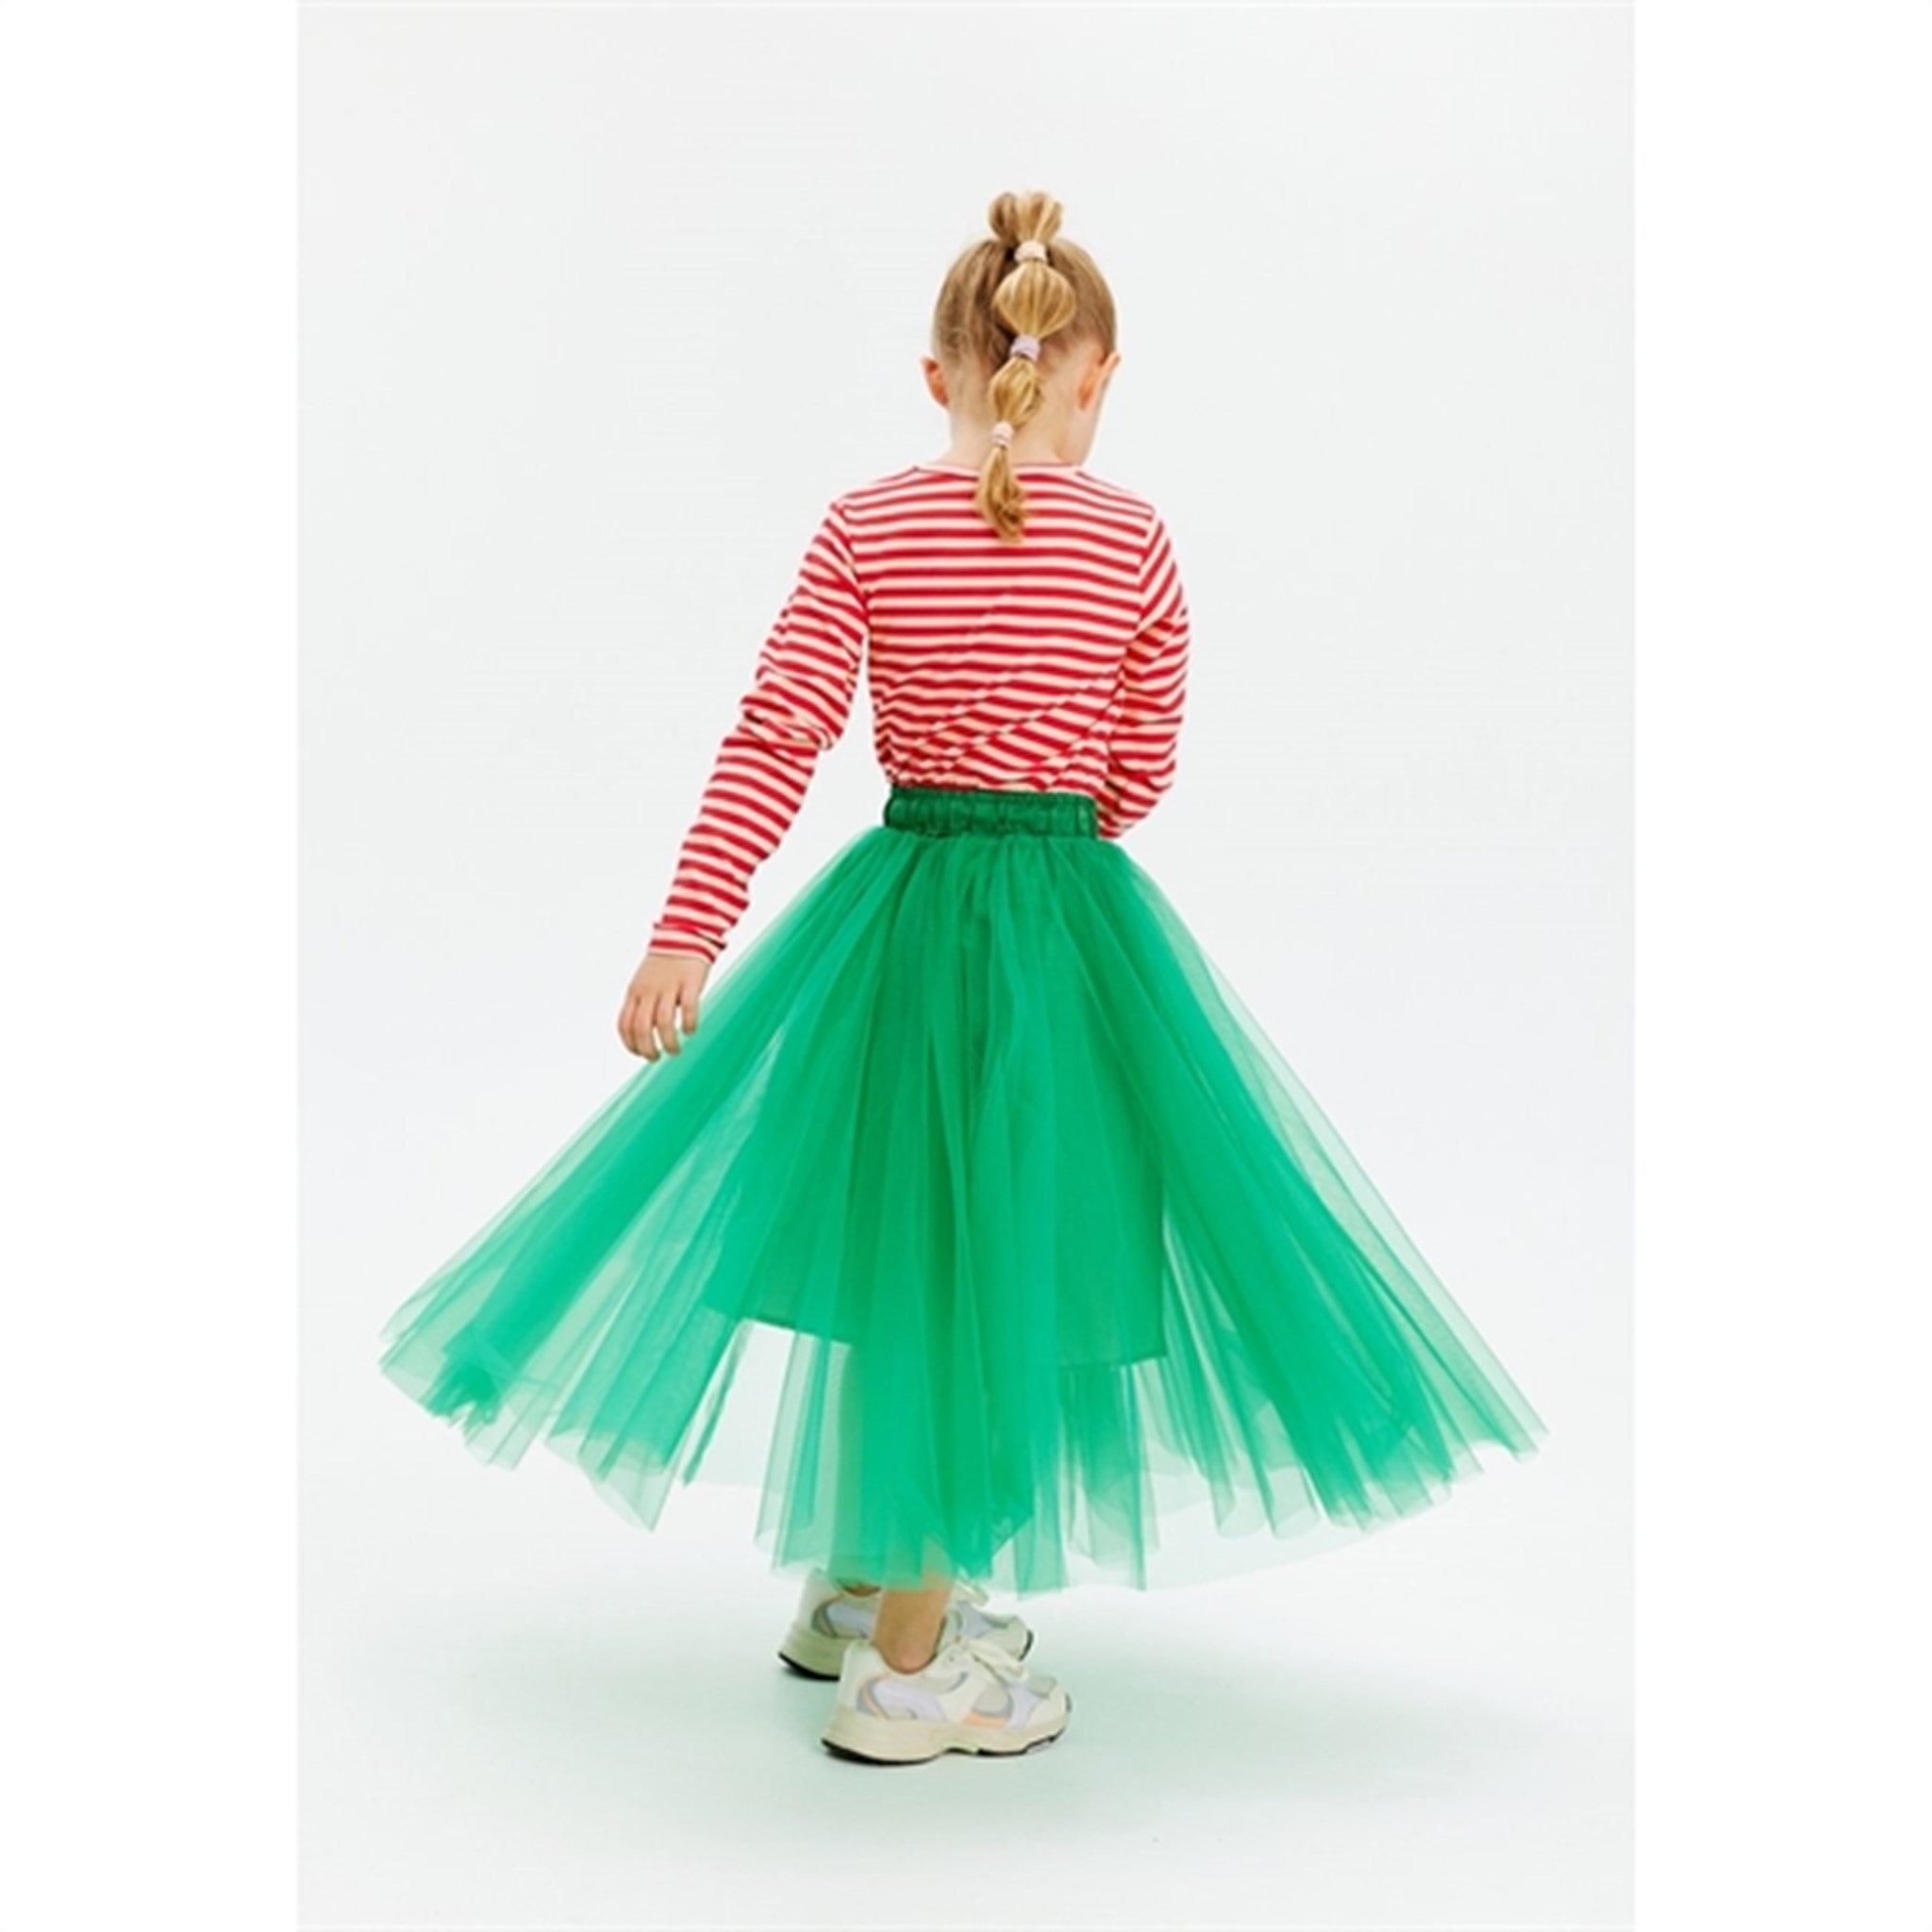 The New Bright Green Heaven Skirt 4